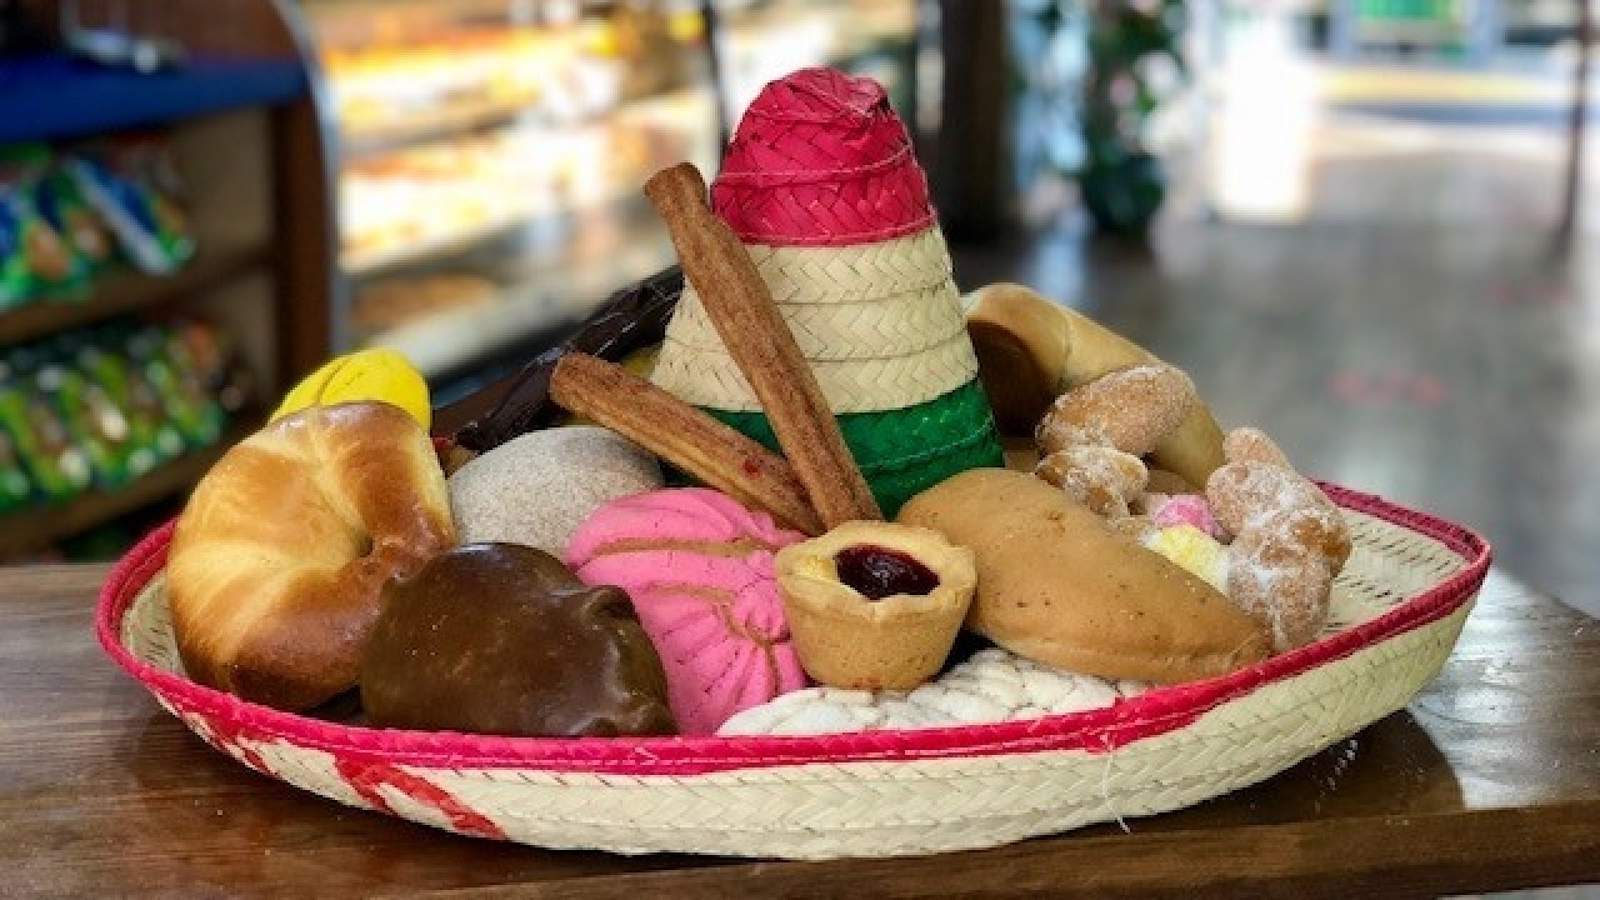 Mexicantown Bakery celebrates Hispanic Heritage Month